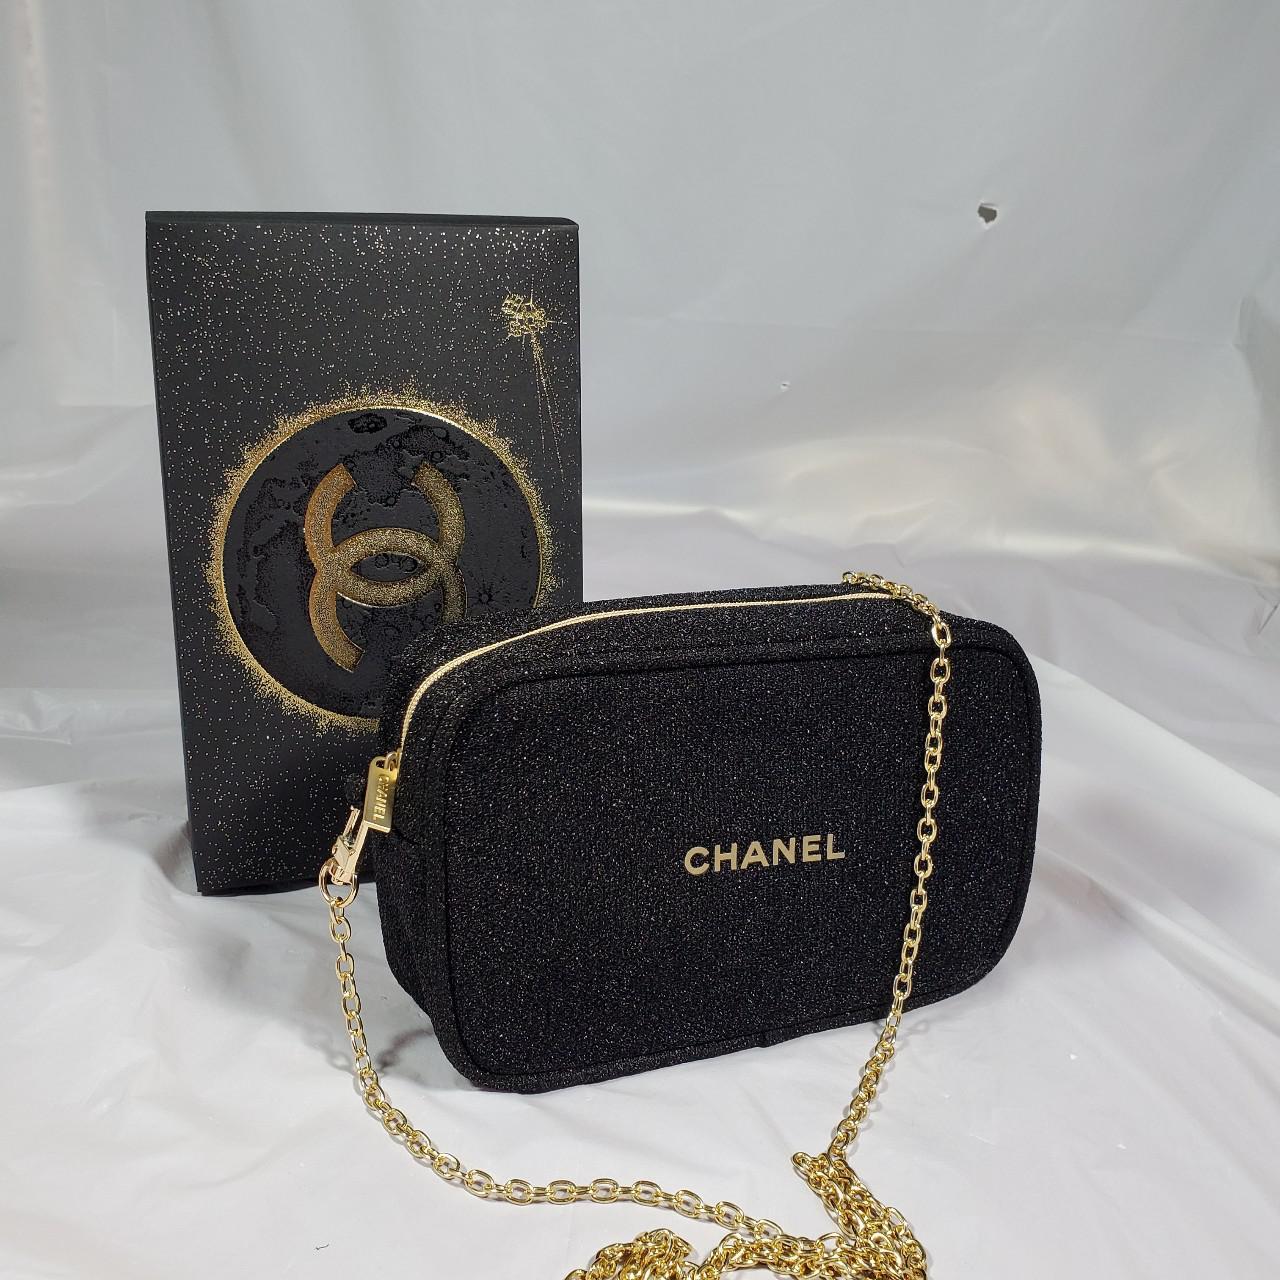 Chanel Black and Gold | Depop